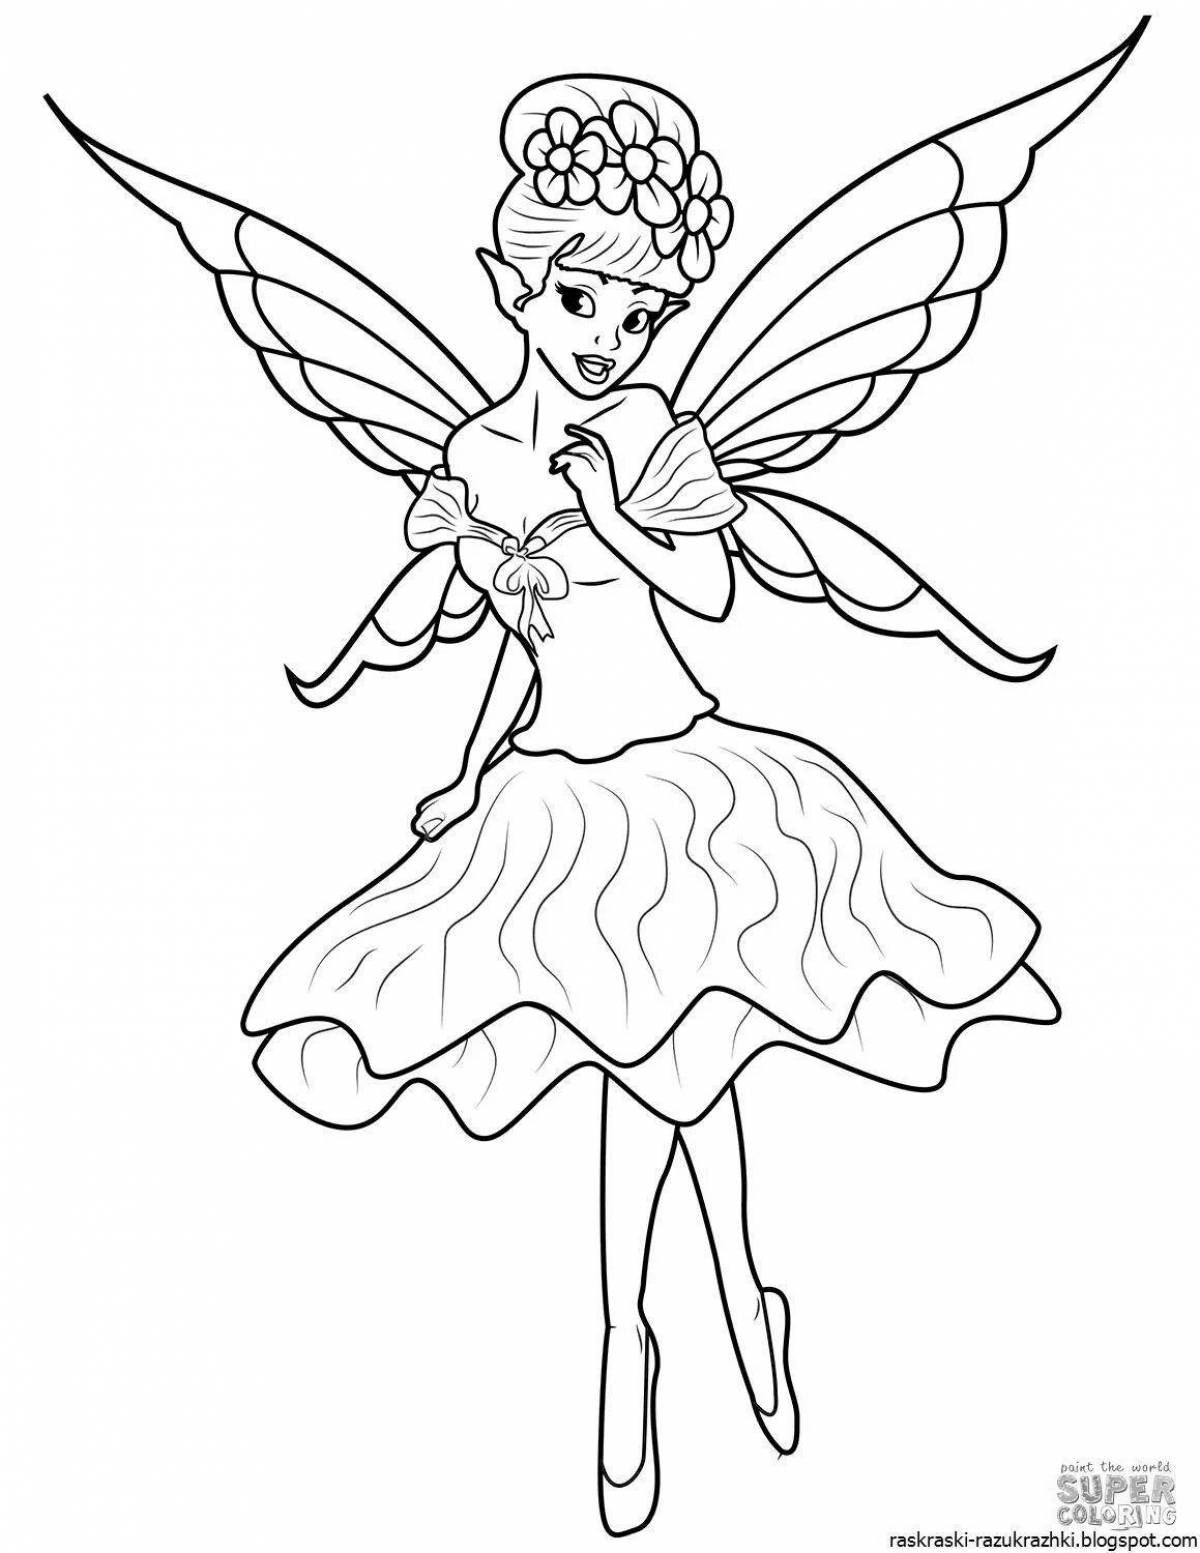 Fairy for children aged 5 #1